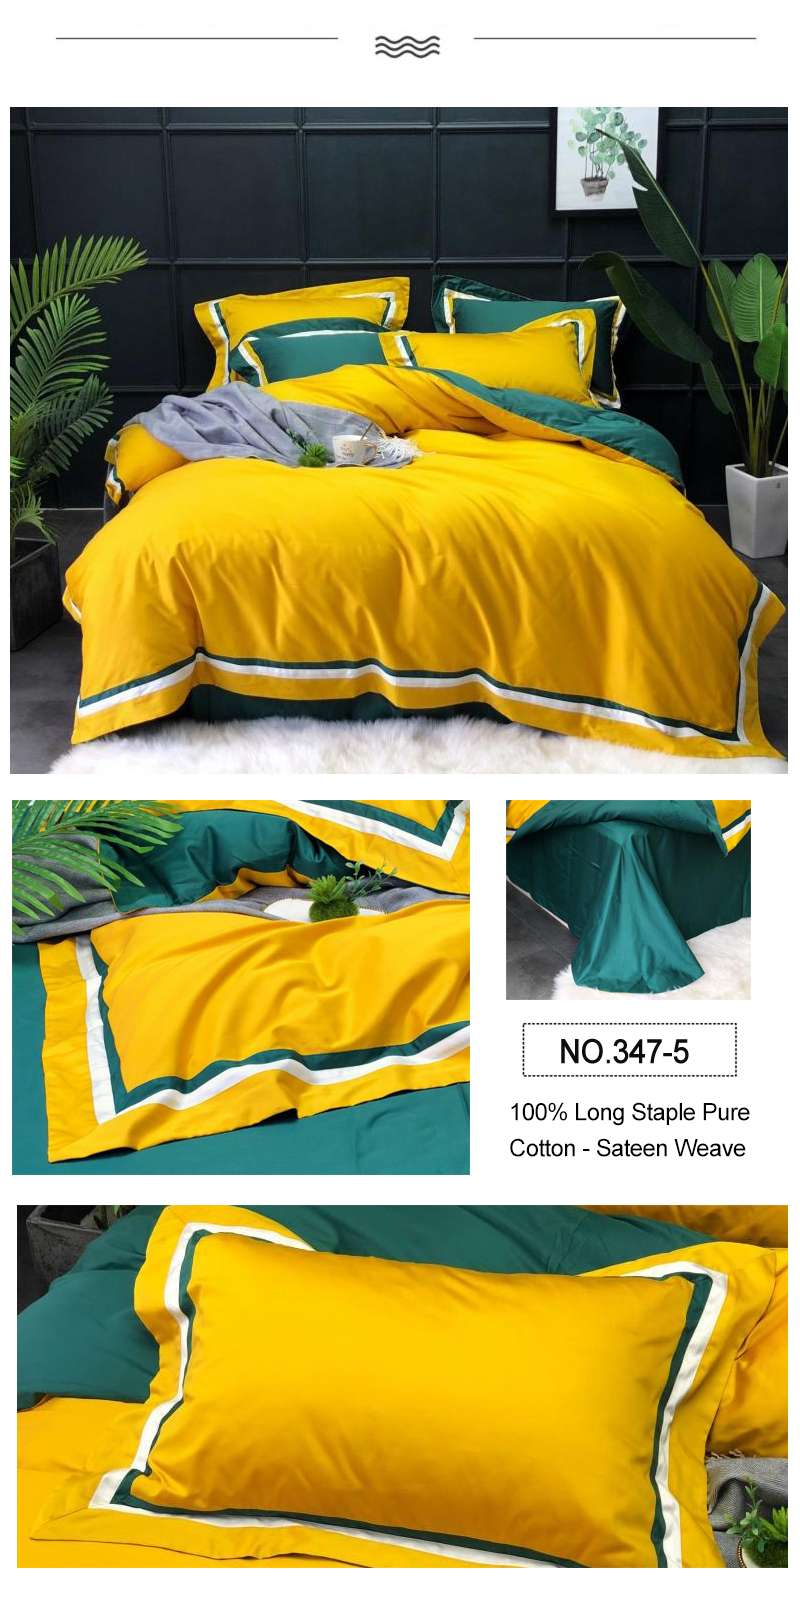 Bedsheet 100% Long Staple Cotton Fashion Style